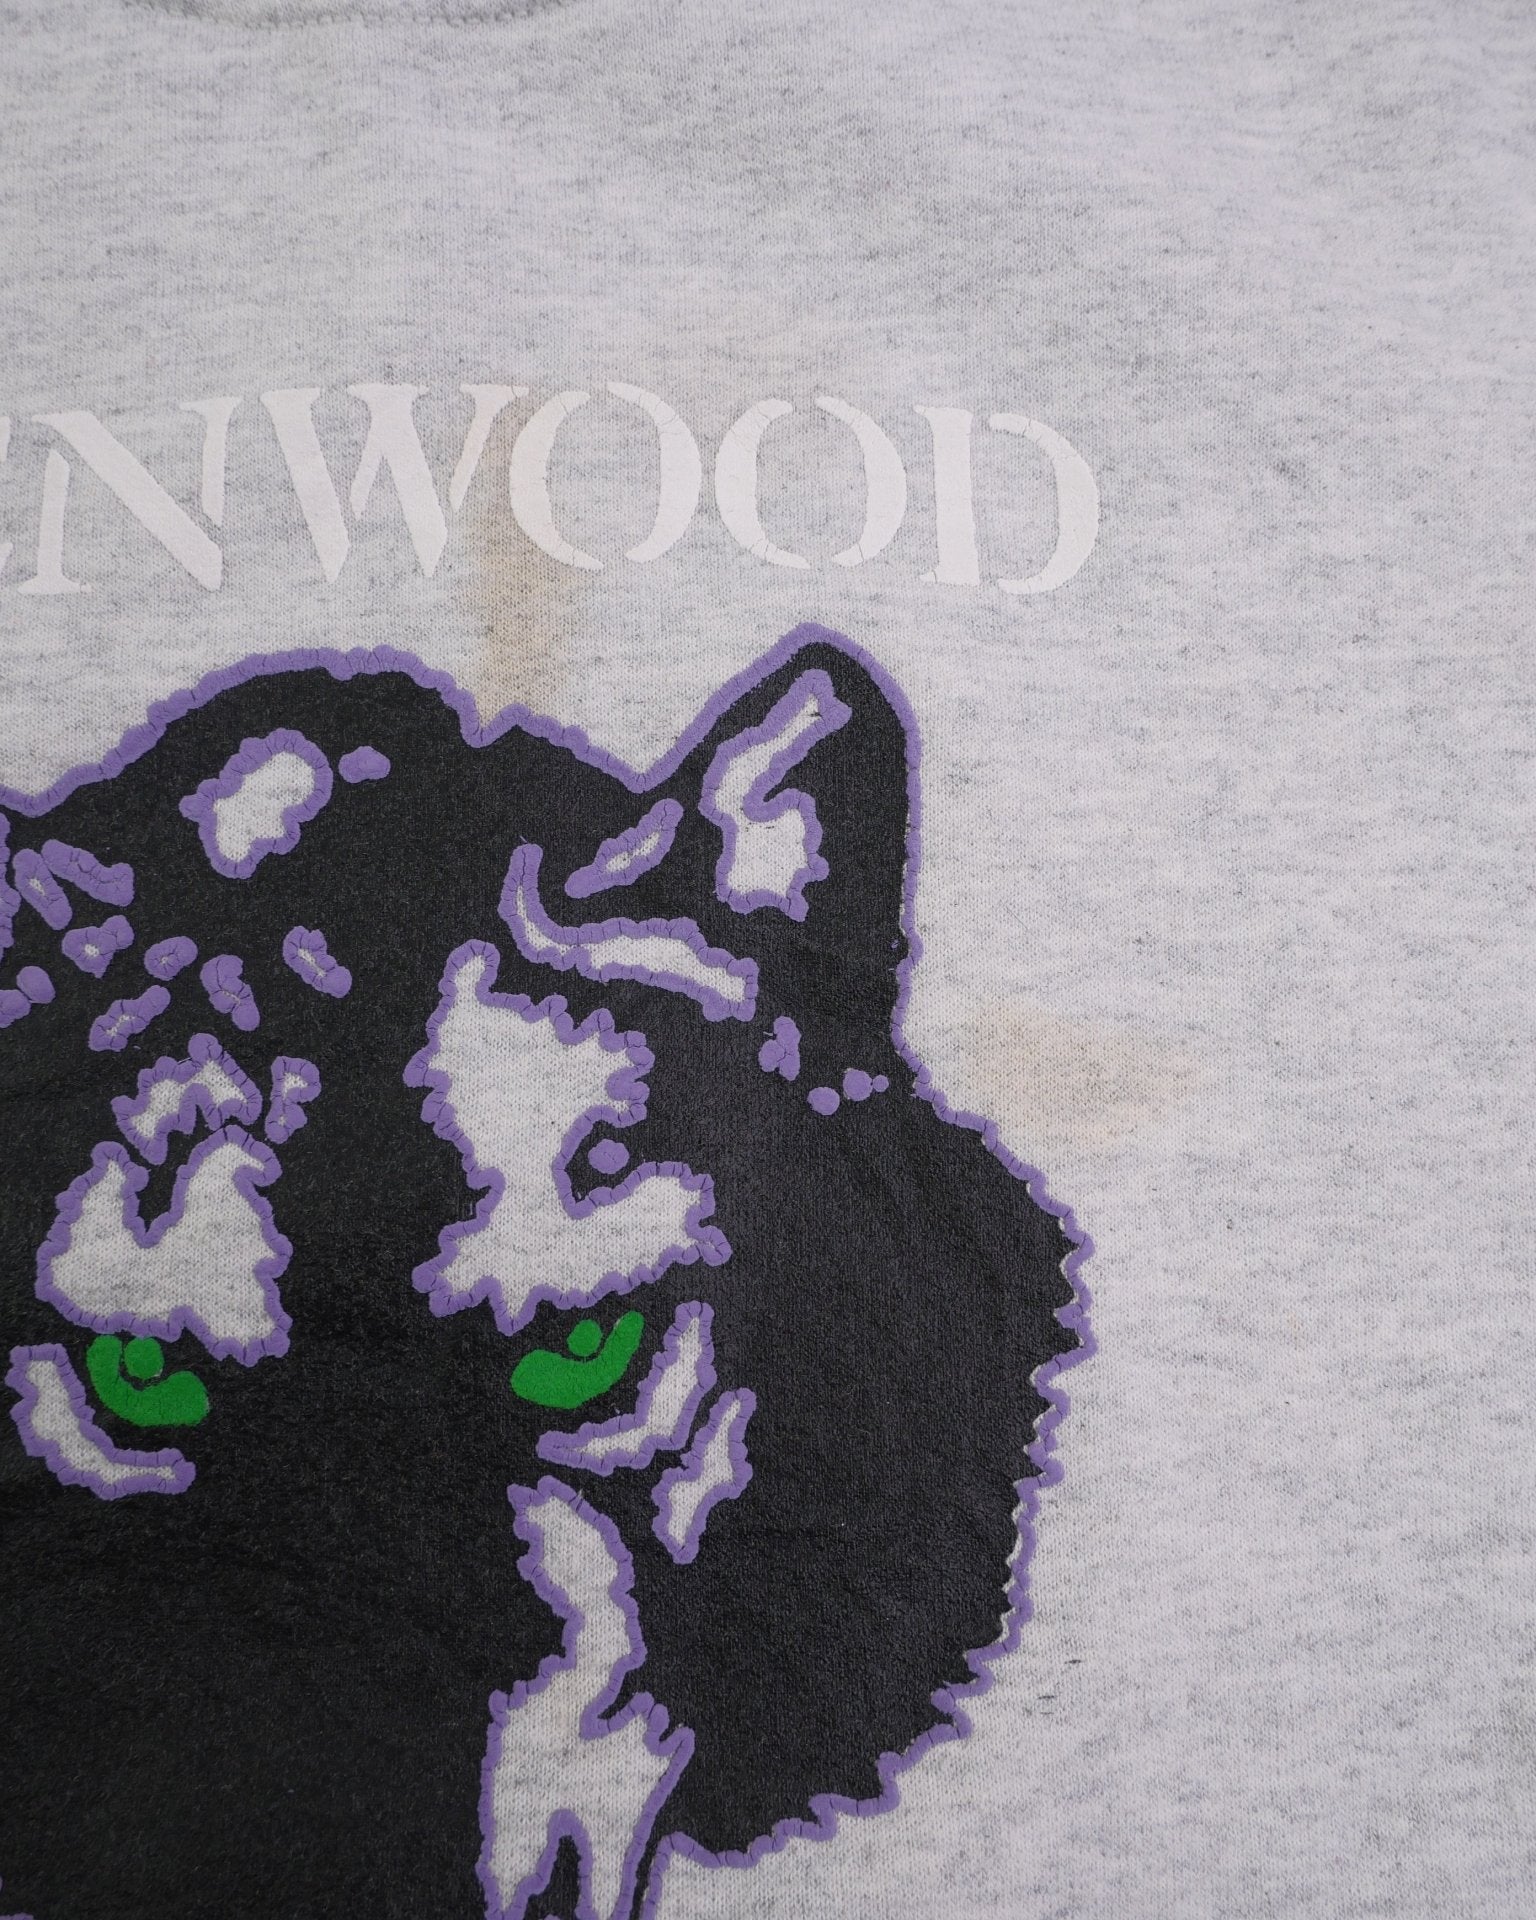 printed Logo 'Kenwood' grey oversized Sweater - Peeces